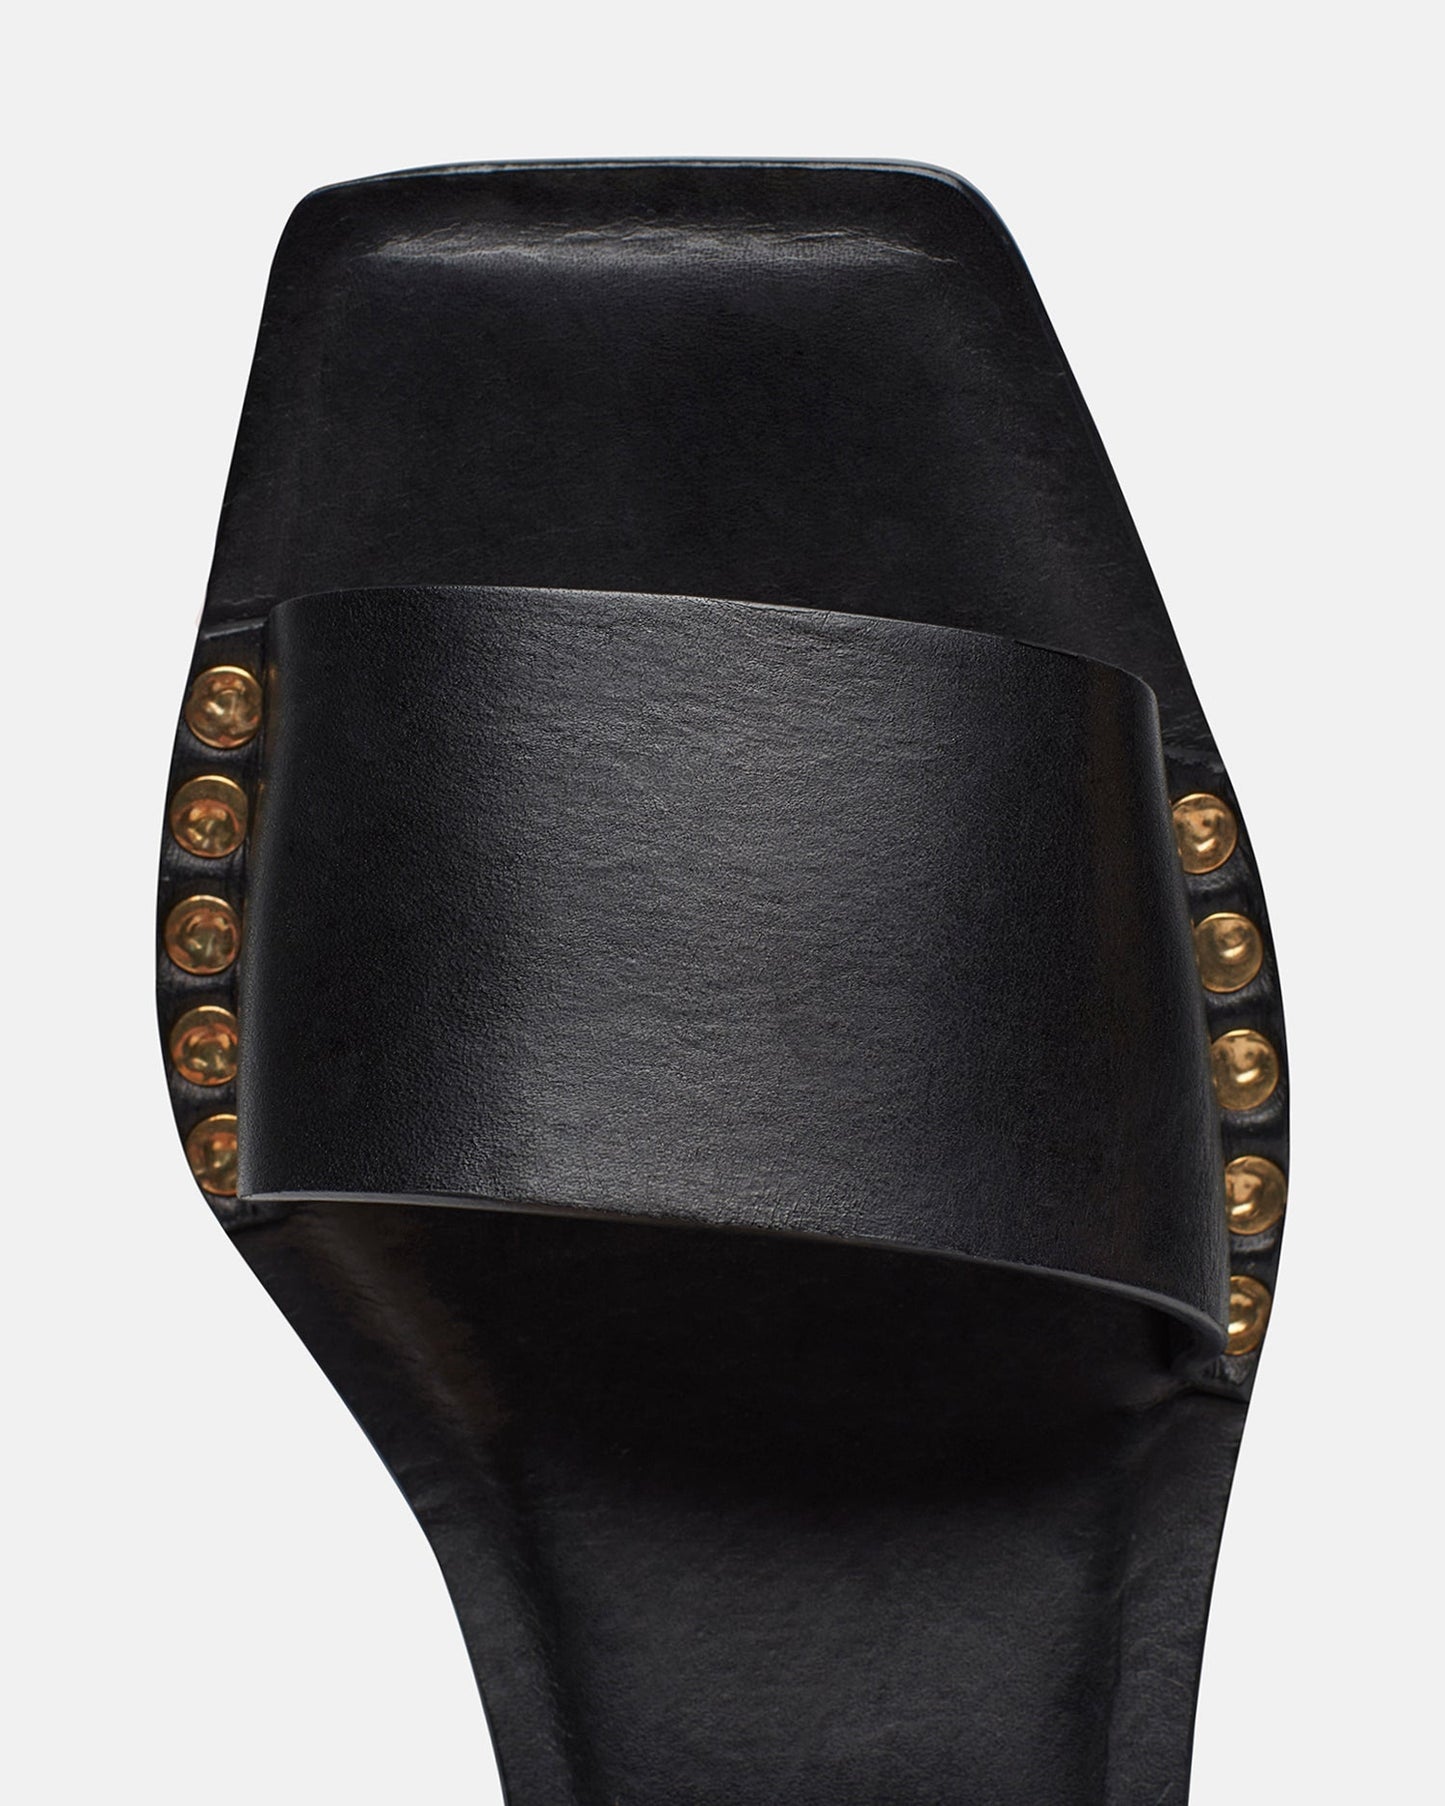 Ibiron - Leather Sandals - Black